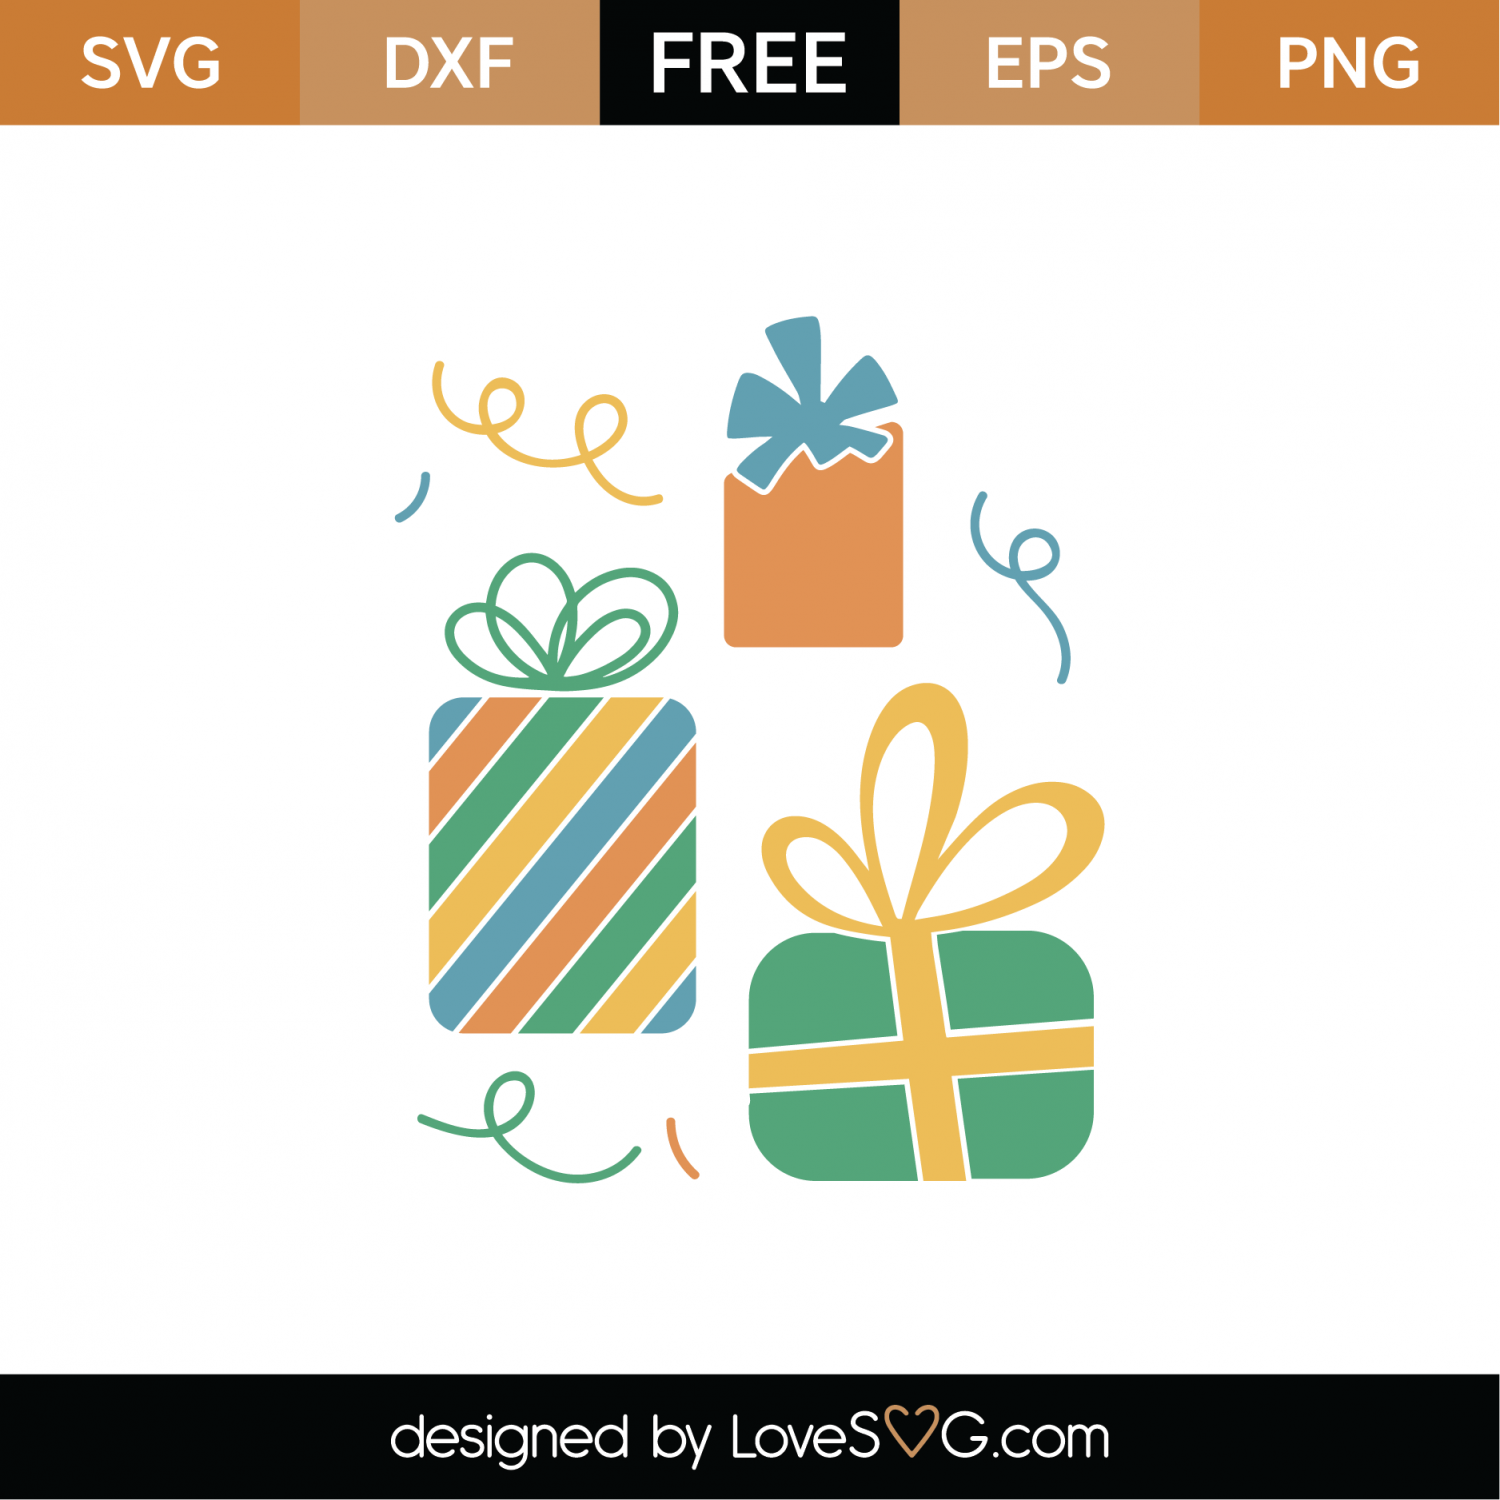 Download Free Birthday Gifts SVG Cut File | Lovesvg.com